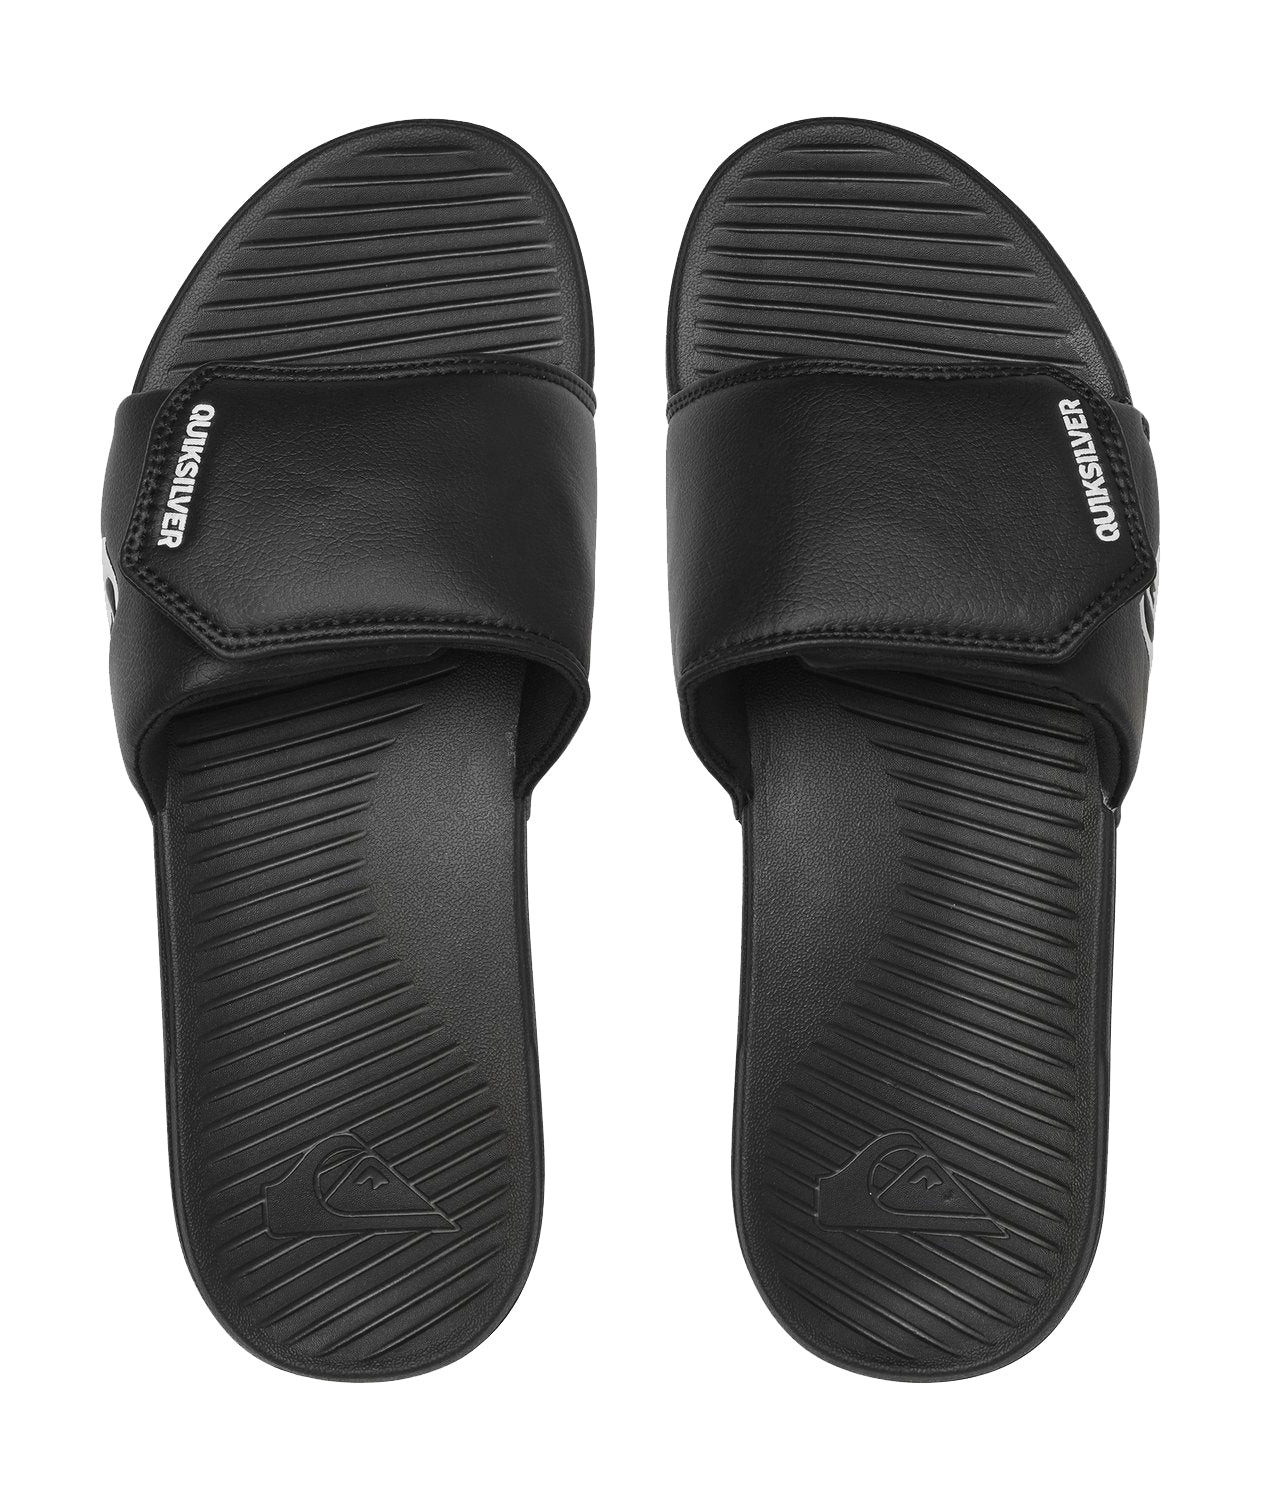 Quiksilver Bright Coast Adjust Mens Sandal XKWK-Black-White-Black 7